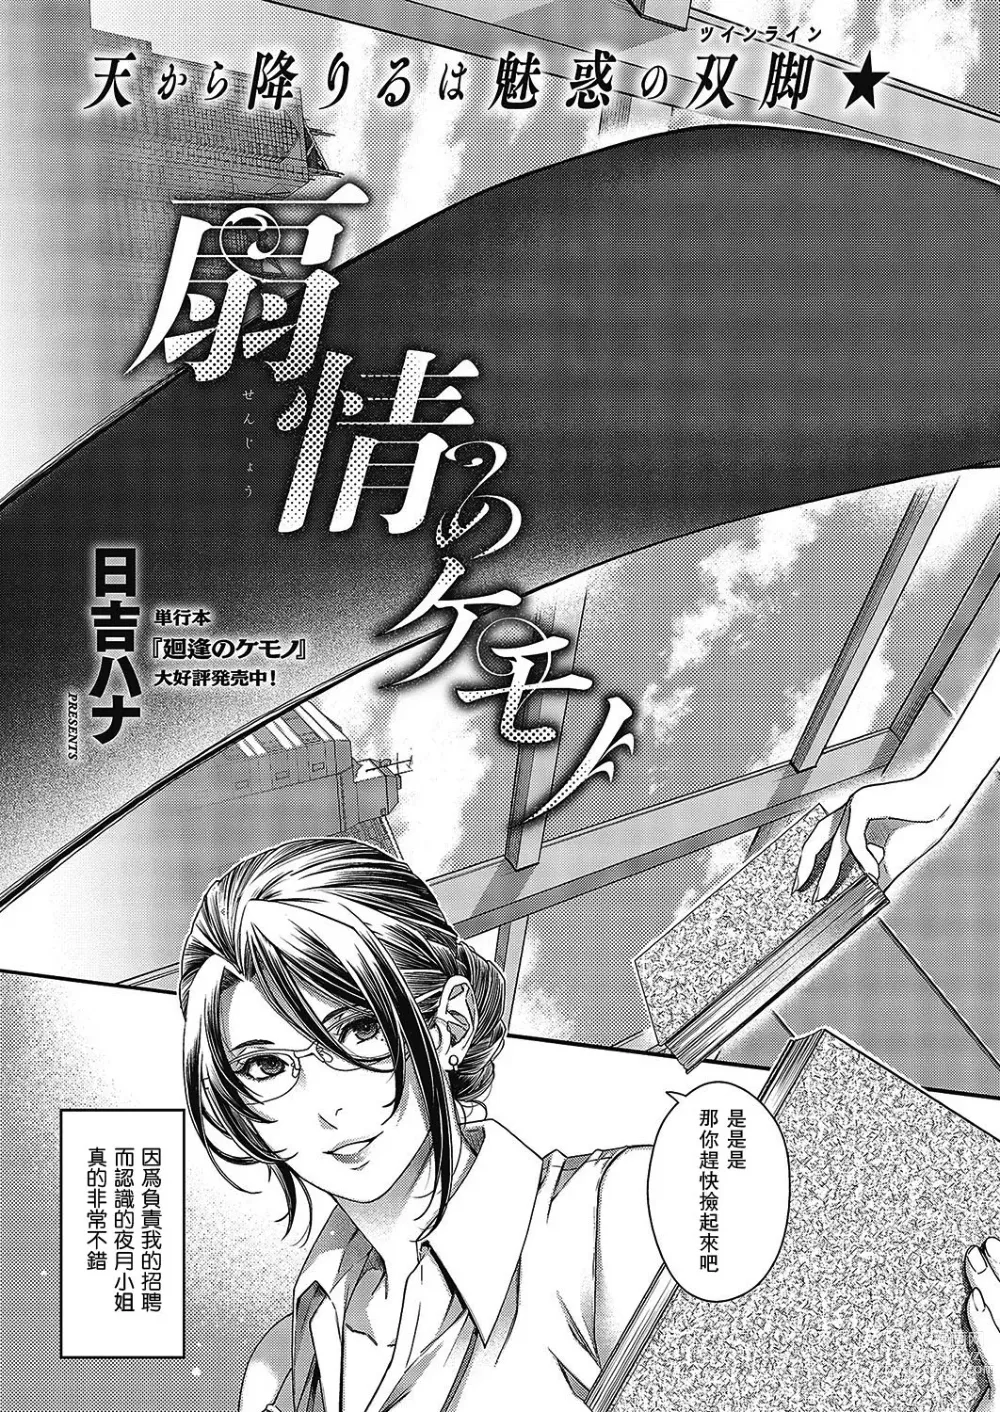 Page 3 of manga Senjou no Kemono